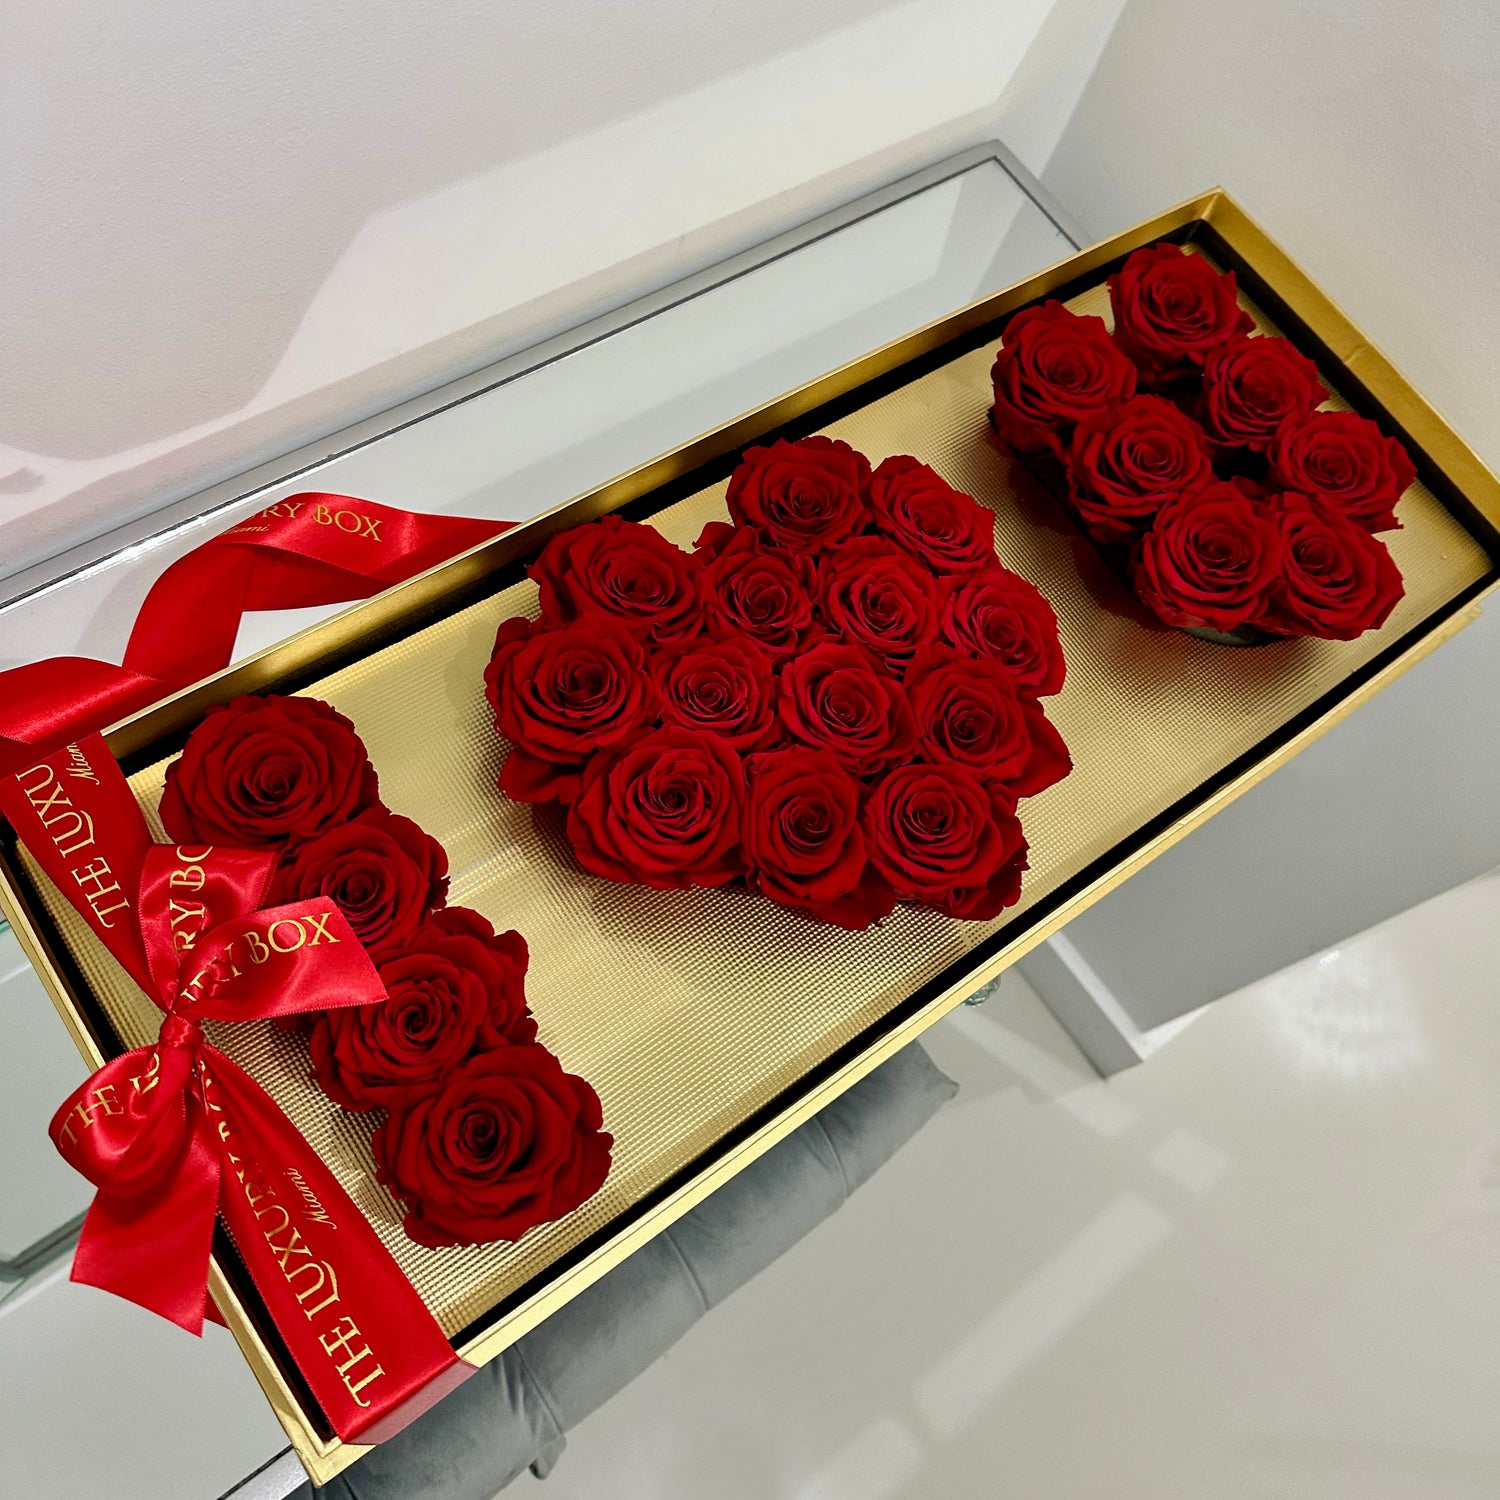 Comprar rosas eternas - Roses to Love